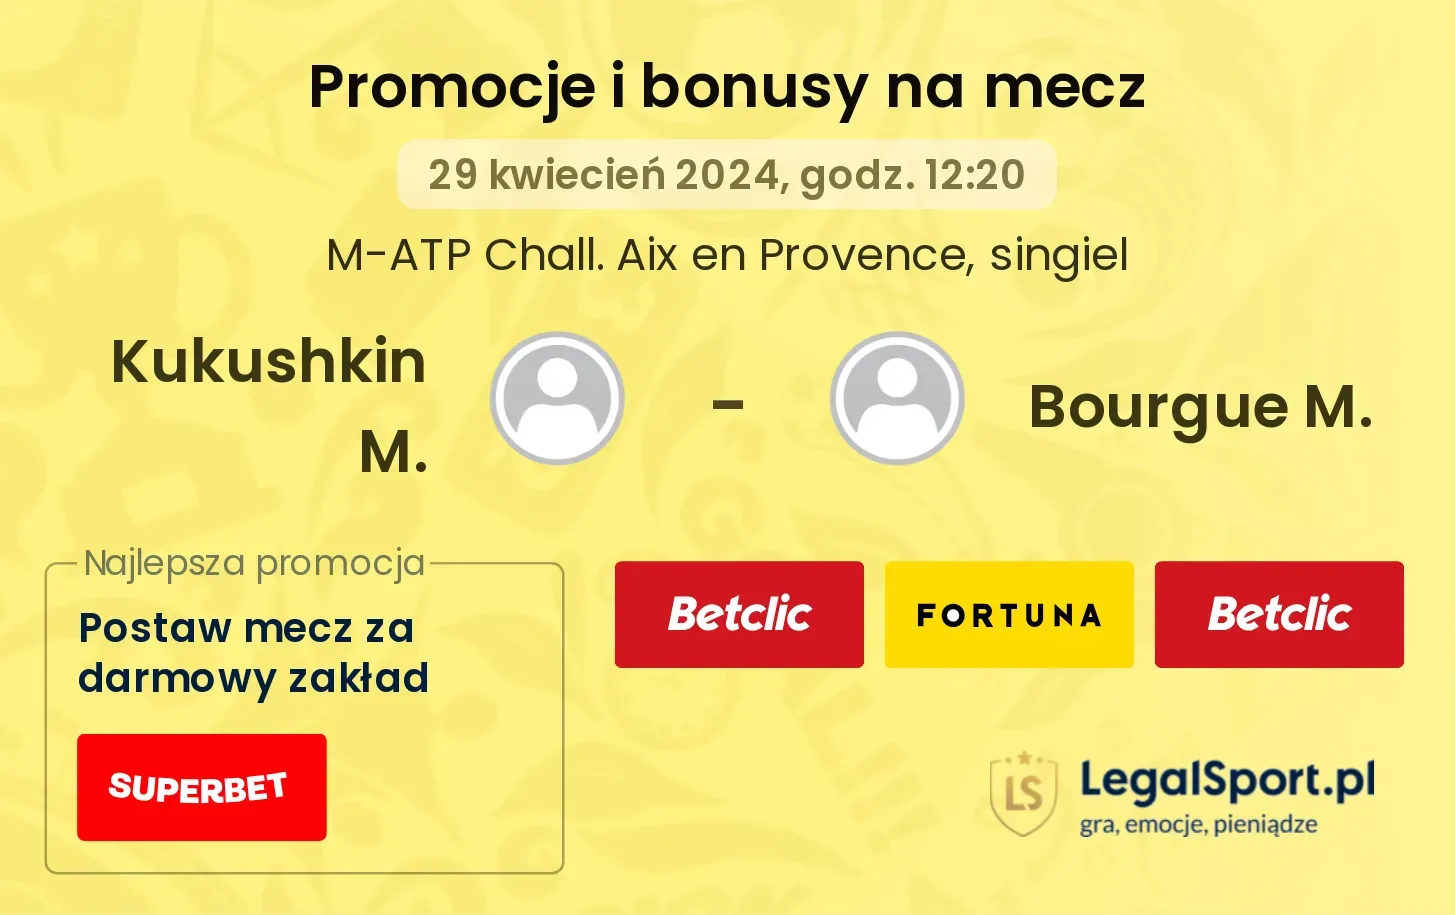 Kukushkin M. - Bourgue M. promocje bonusy na mecz